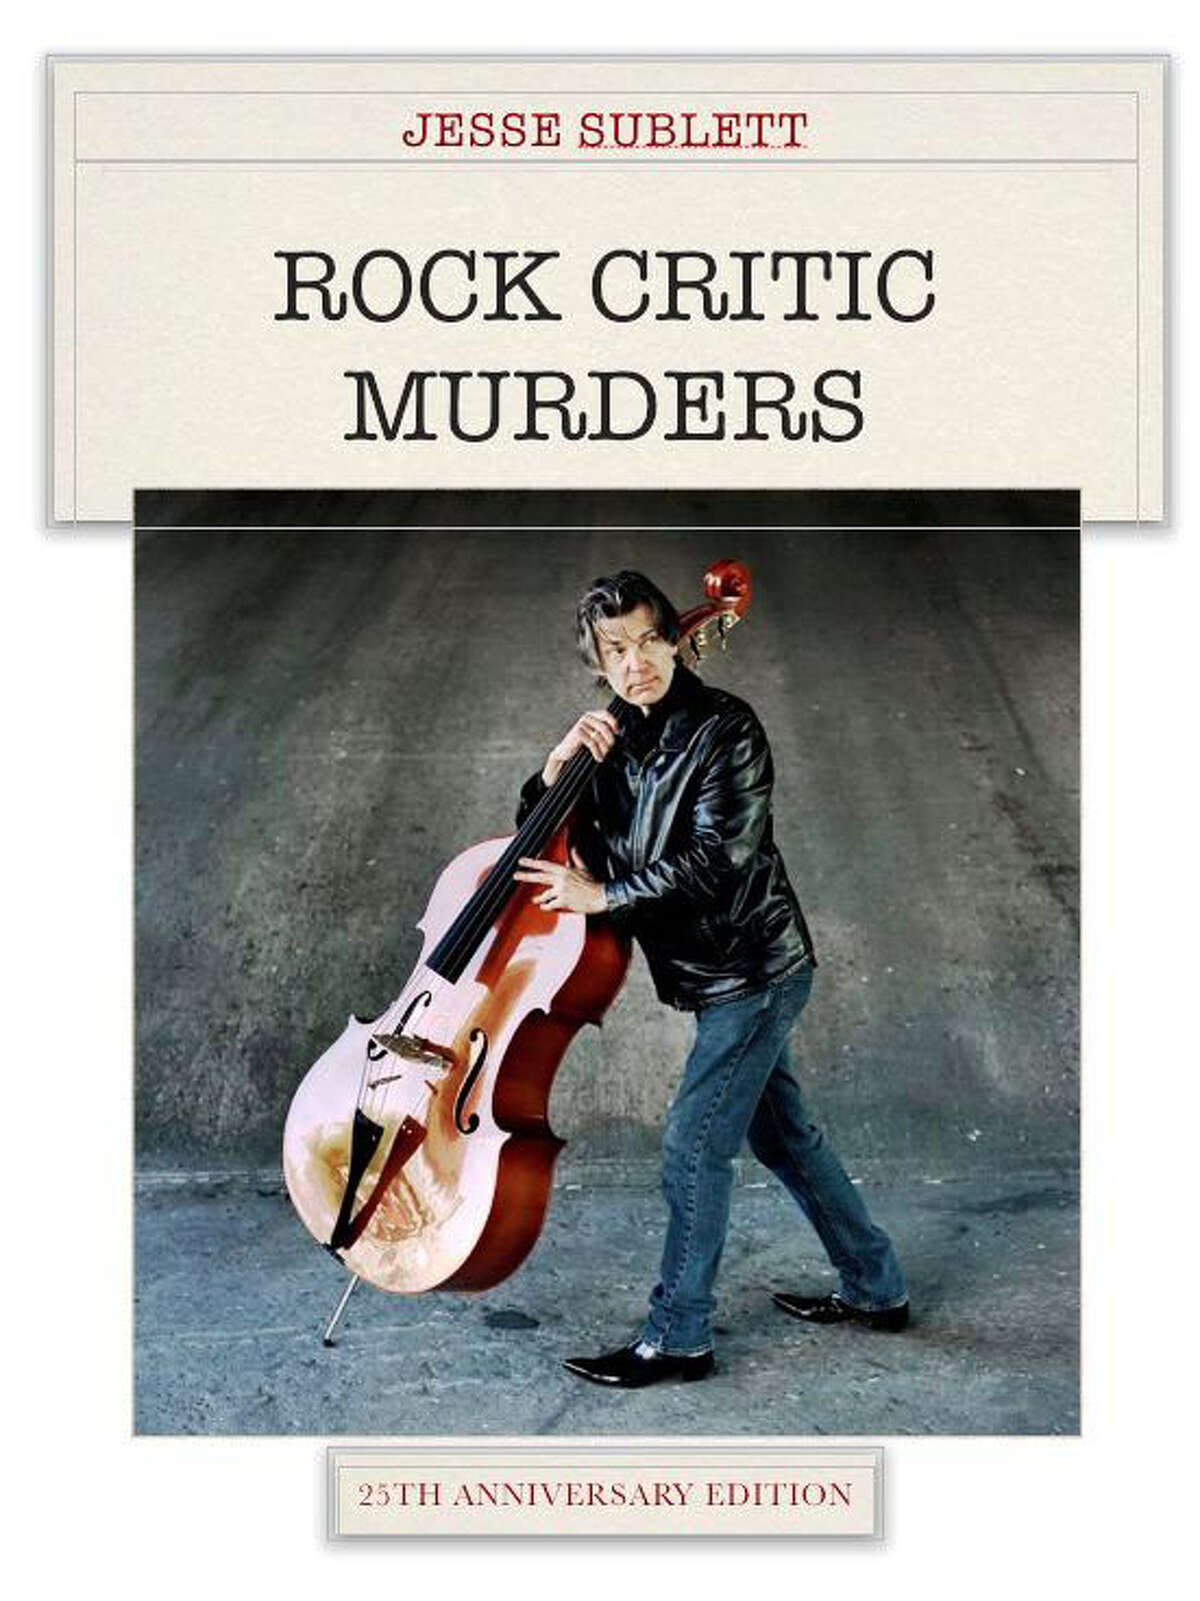 "Rock Critic Murders"